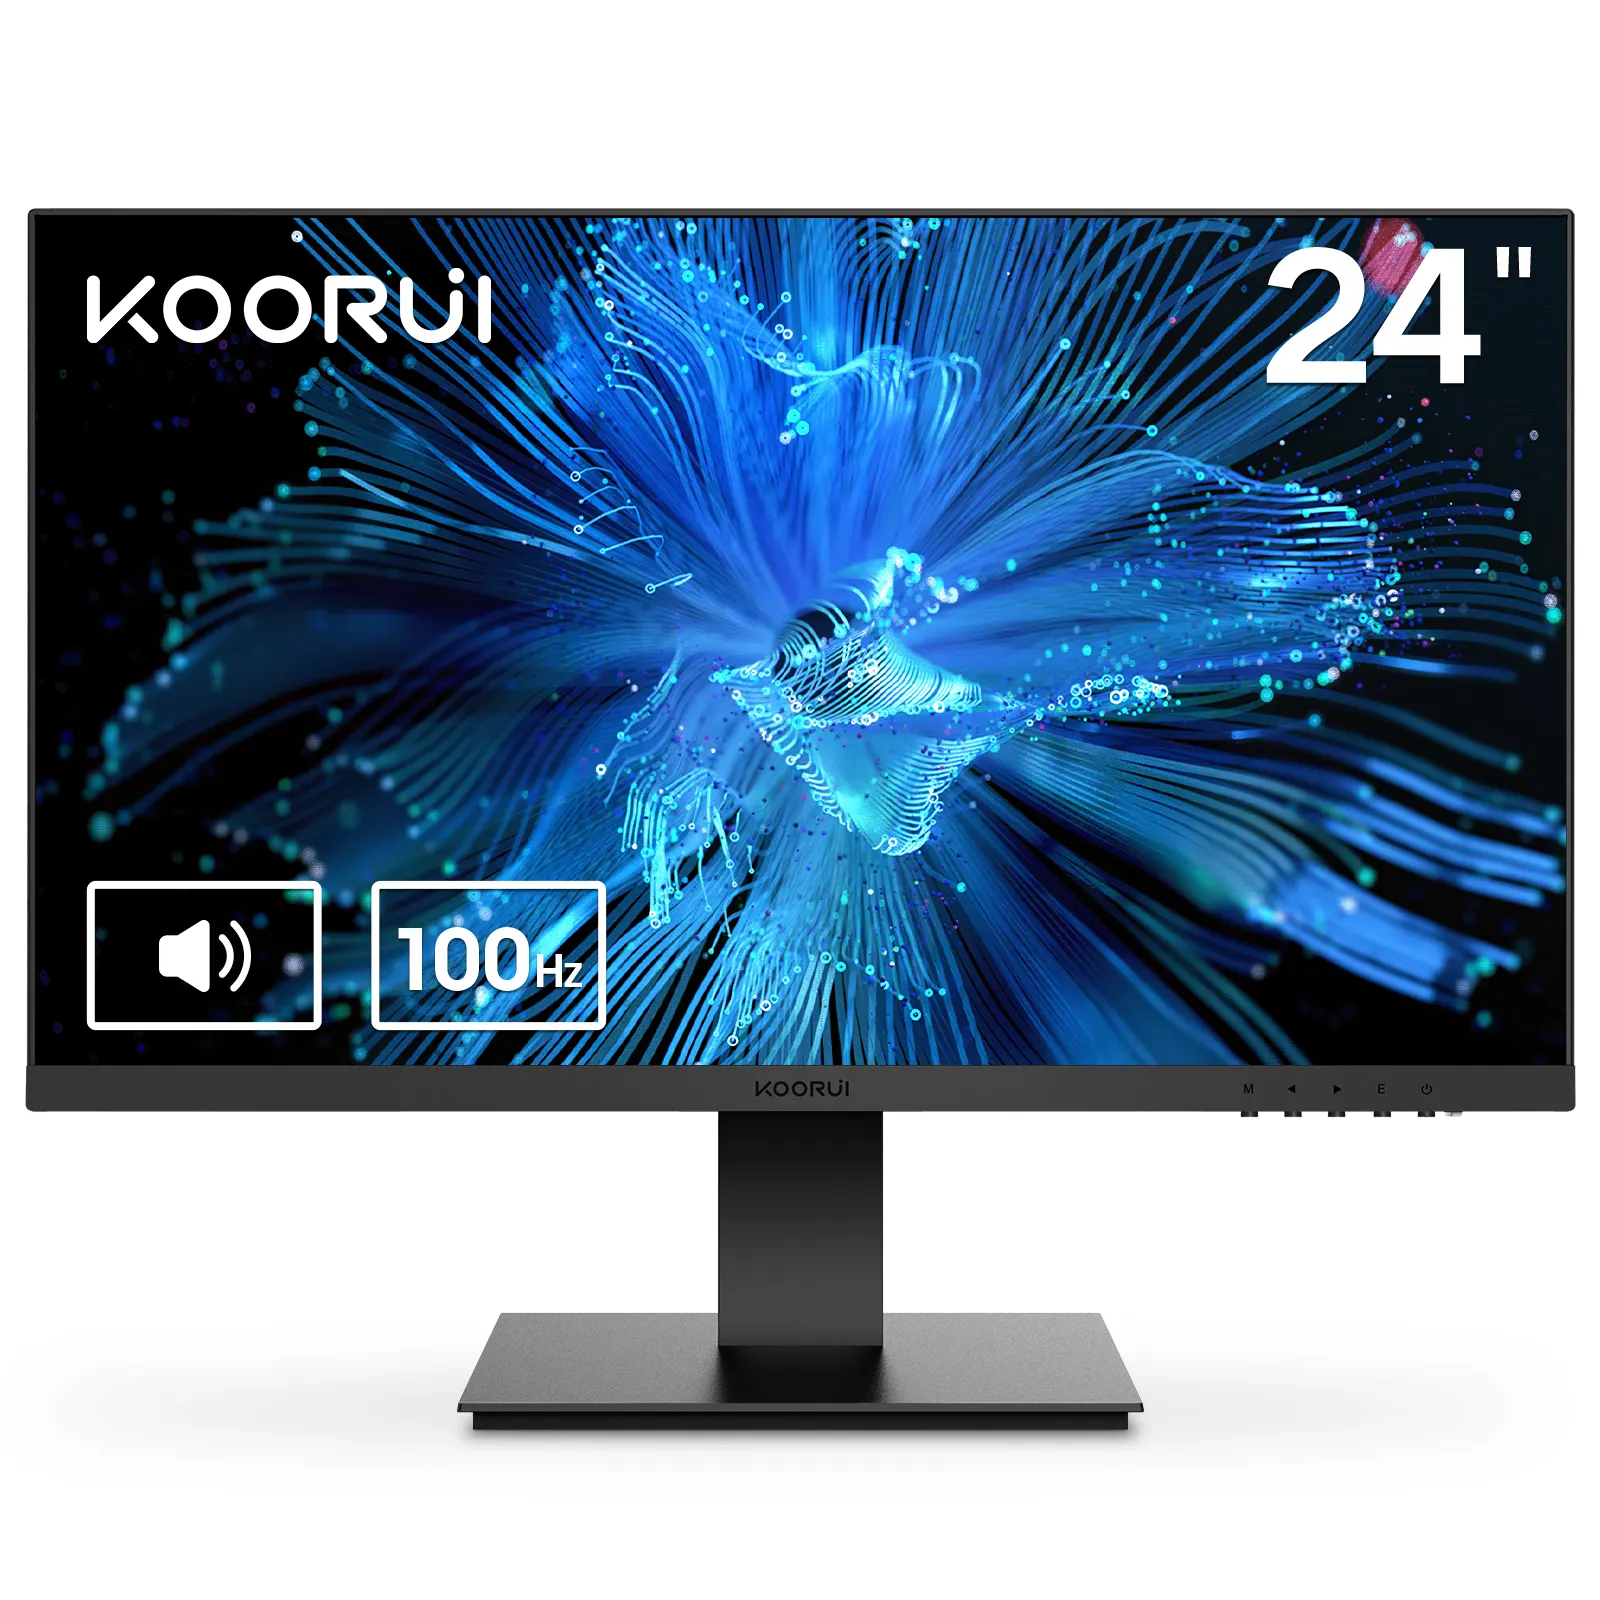 Koorui- pc 24-Zoll-Monitor Desktop HD HDC 1080p rahmenlosen Bildschirm 100Hz RGB PC Computer Display Fabrik